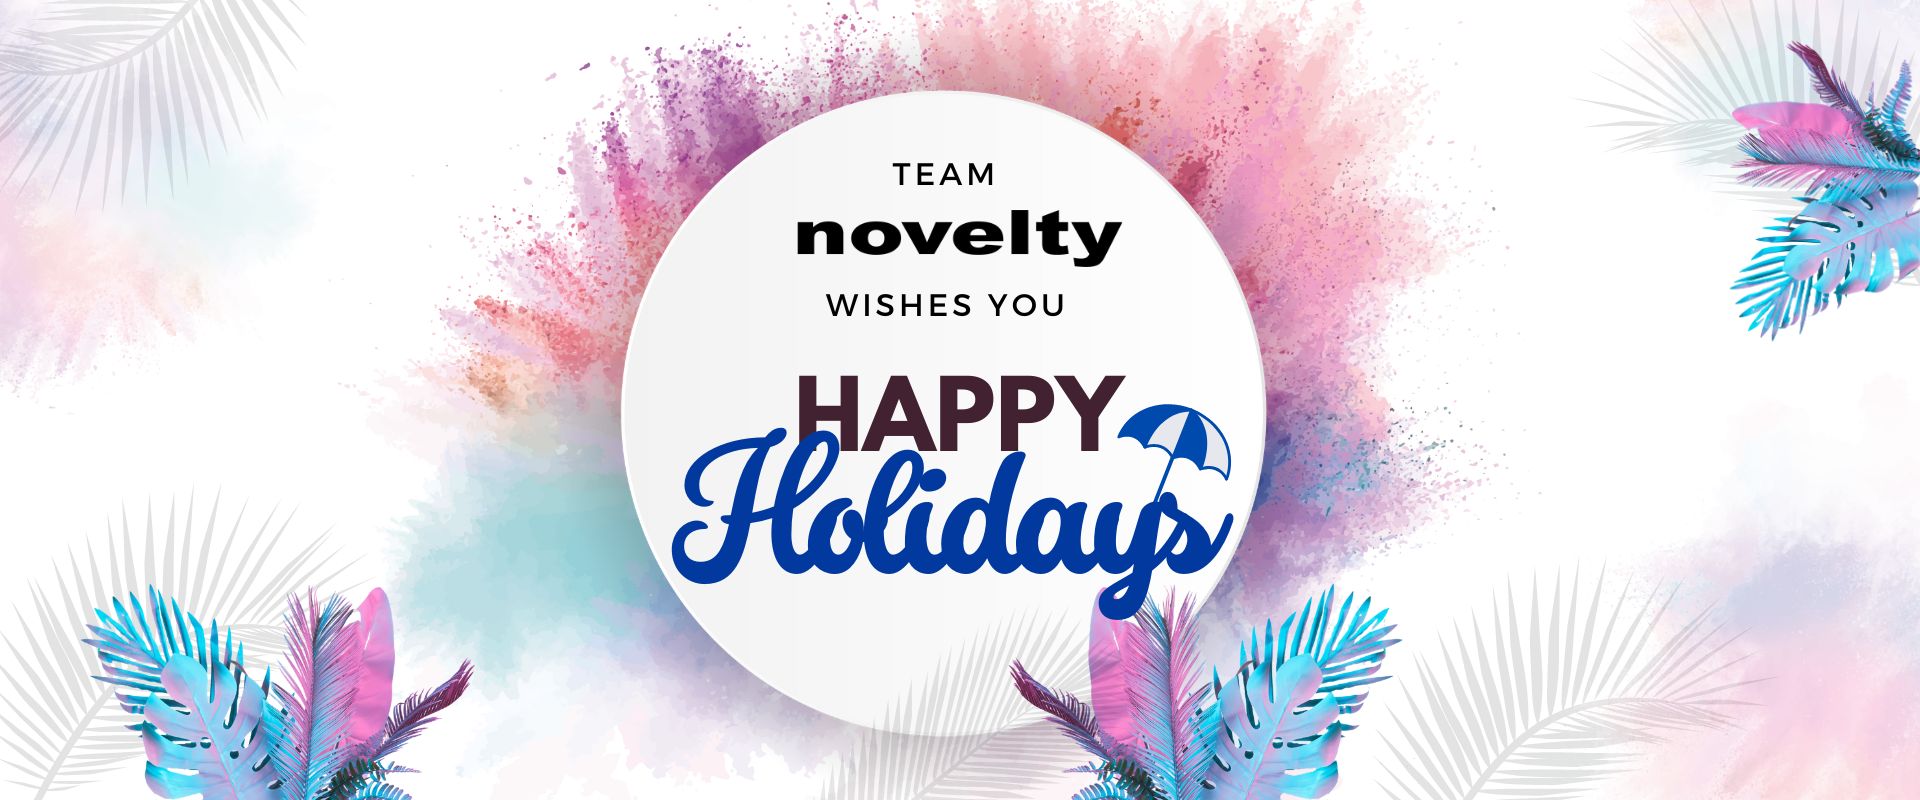 Visuel Team Novelty wishes you happy Holidays !